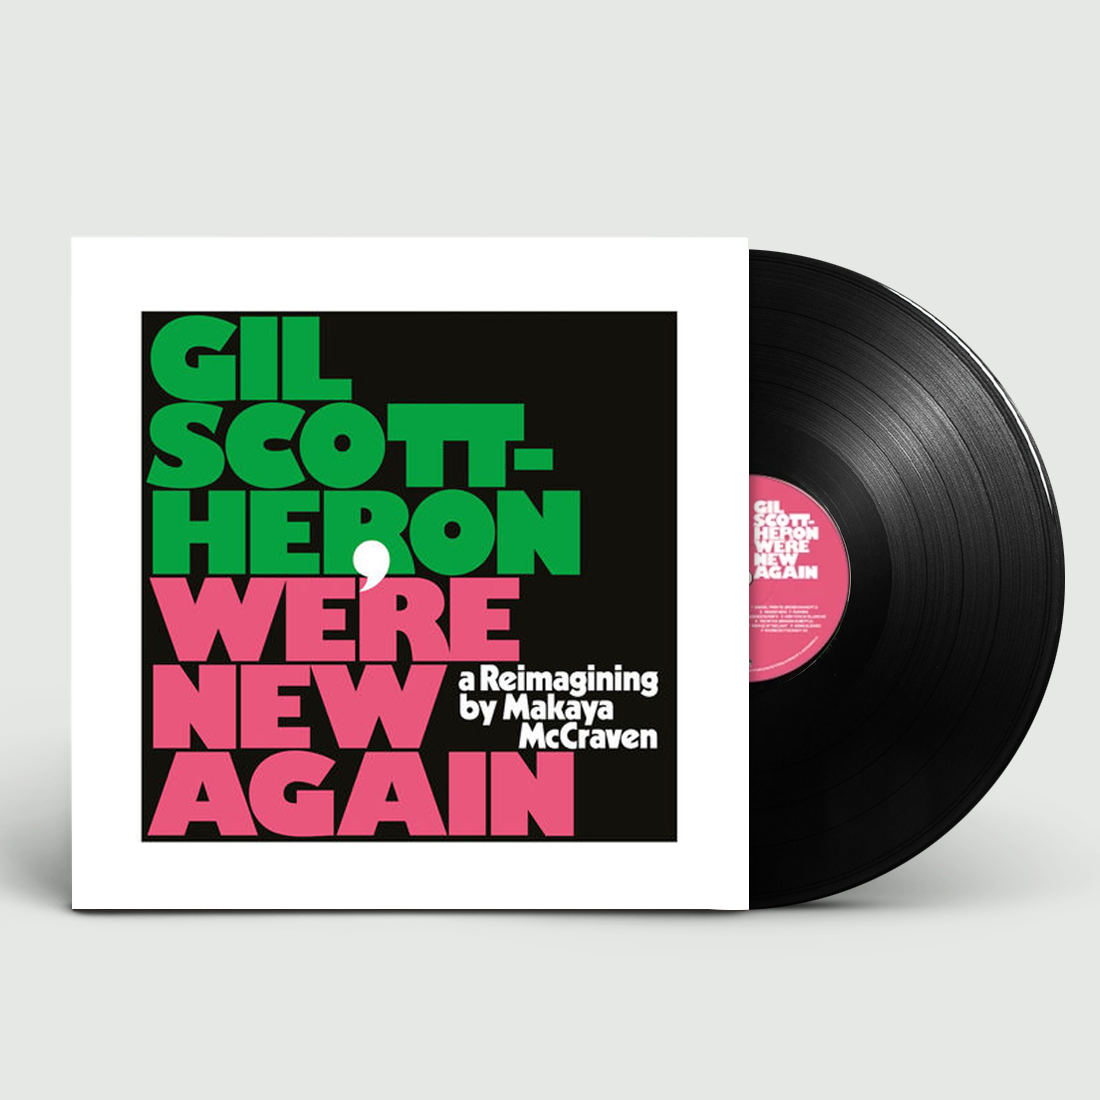 We’re New Again – A Re-imagining by Makaya McCraven: Vinyl LP